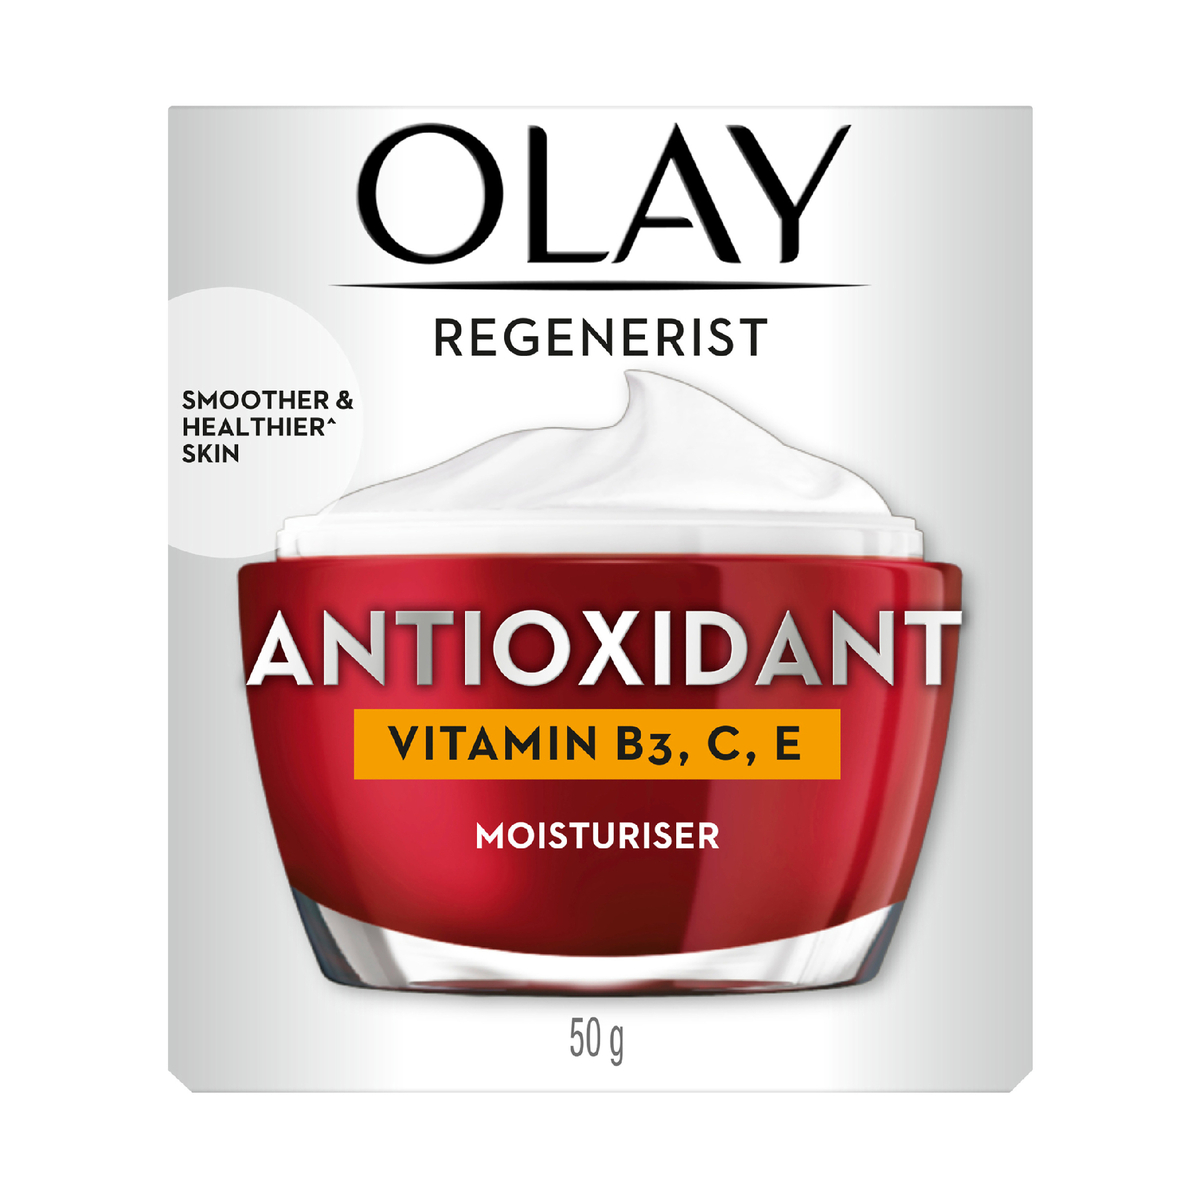 Olay Regenerist Antioxidant Moisturiser, 50 g